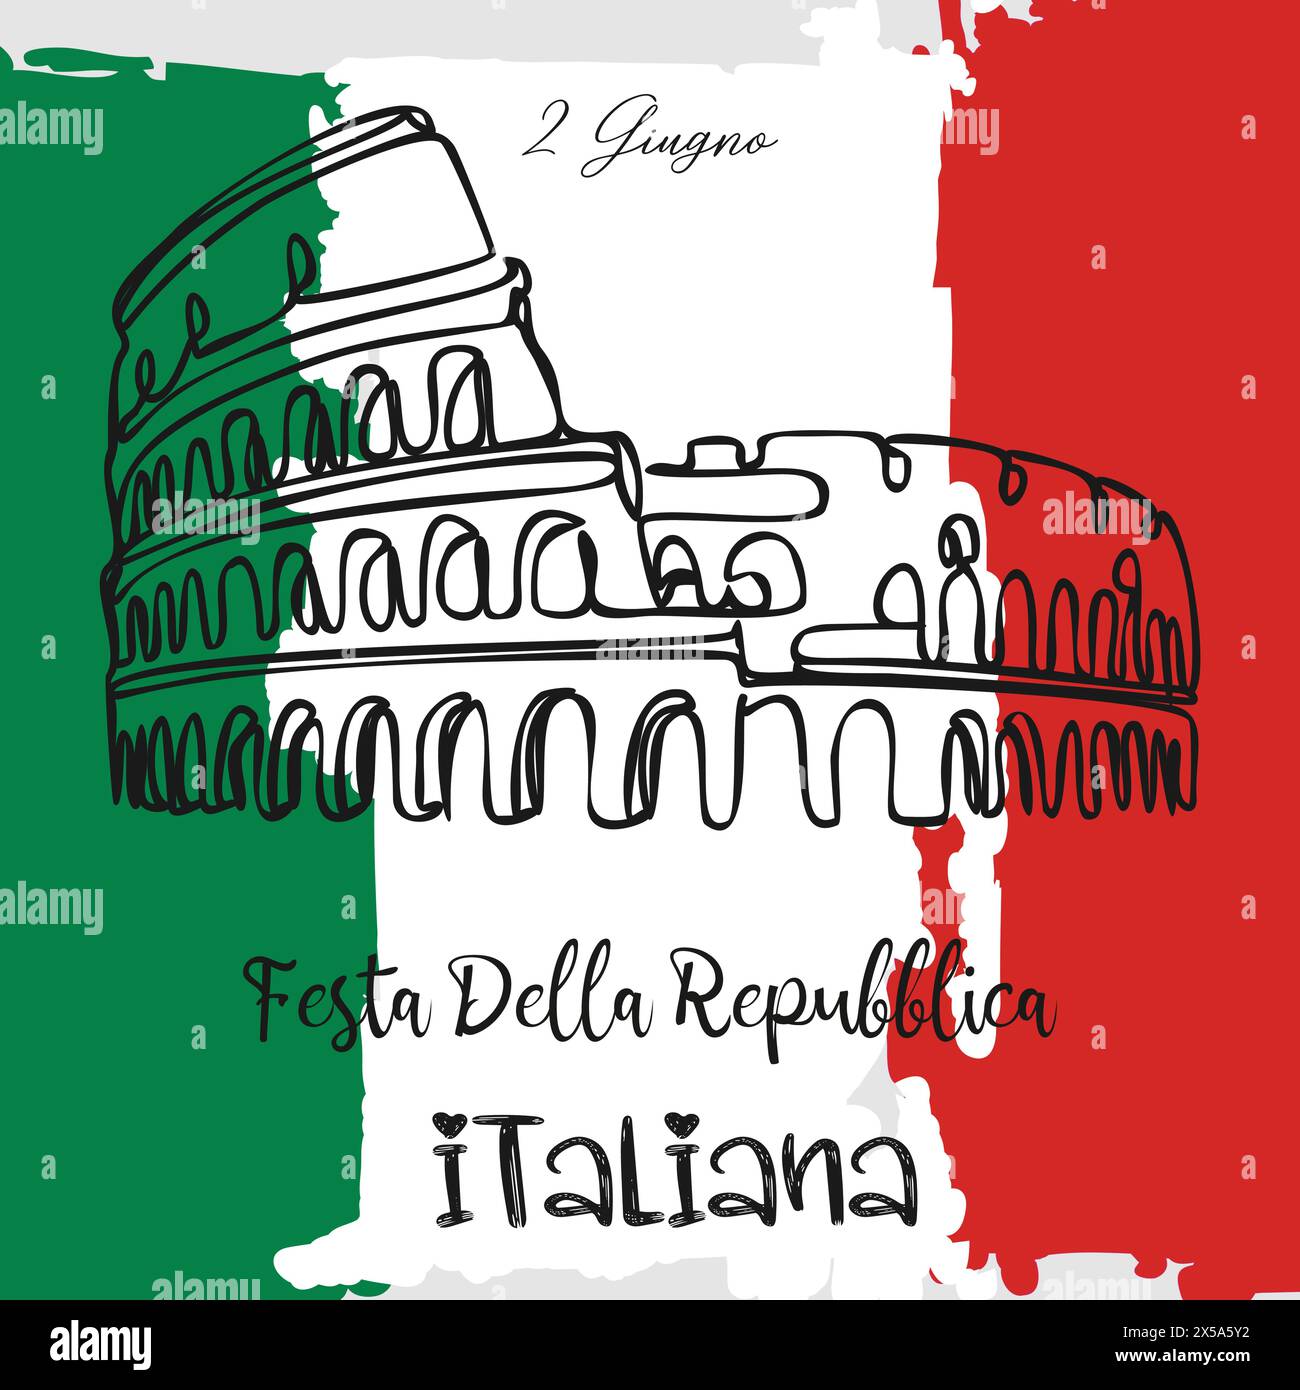 Festa della Repubblica Italiana. Italy Republic Day. Happy national holiday. Celebrated annually on June 2 in Italy. Italy flag. Patriotic poster desi Stock Vector